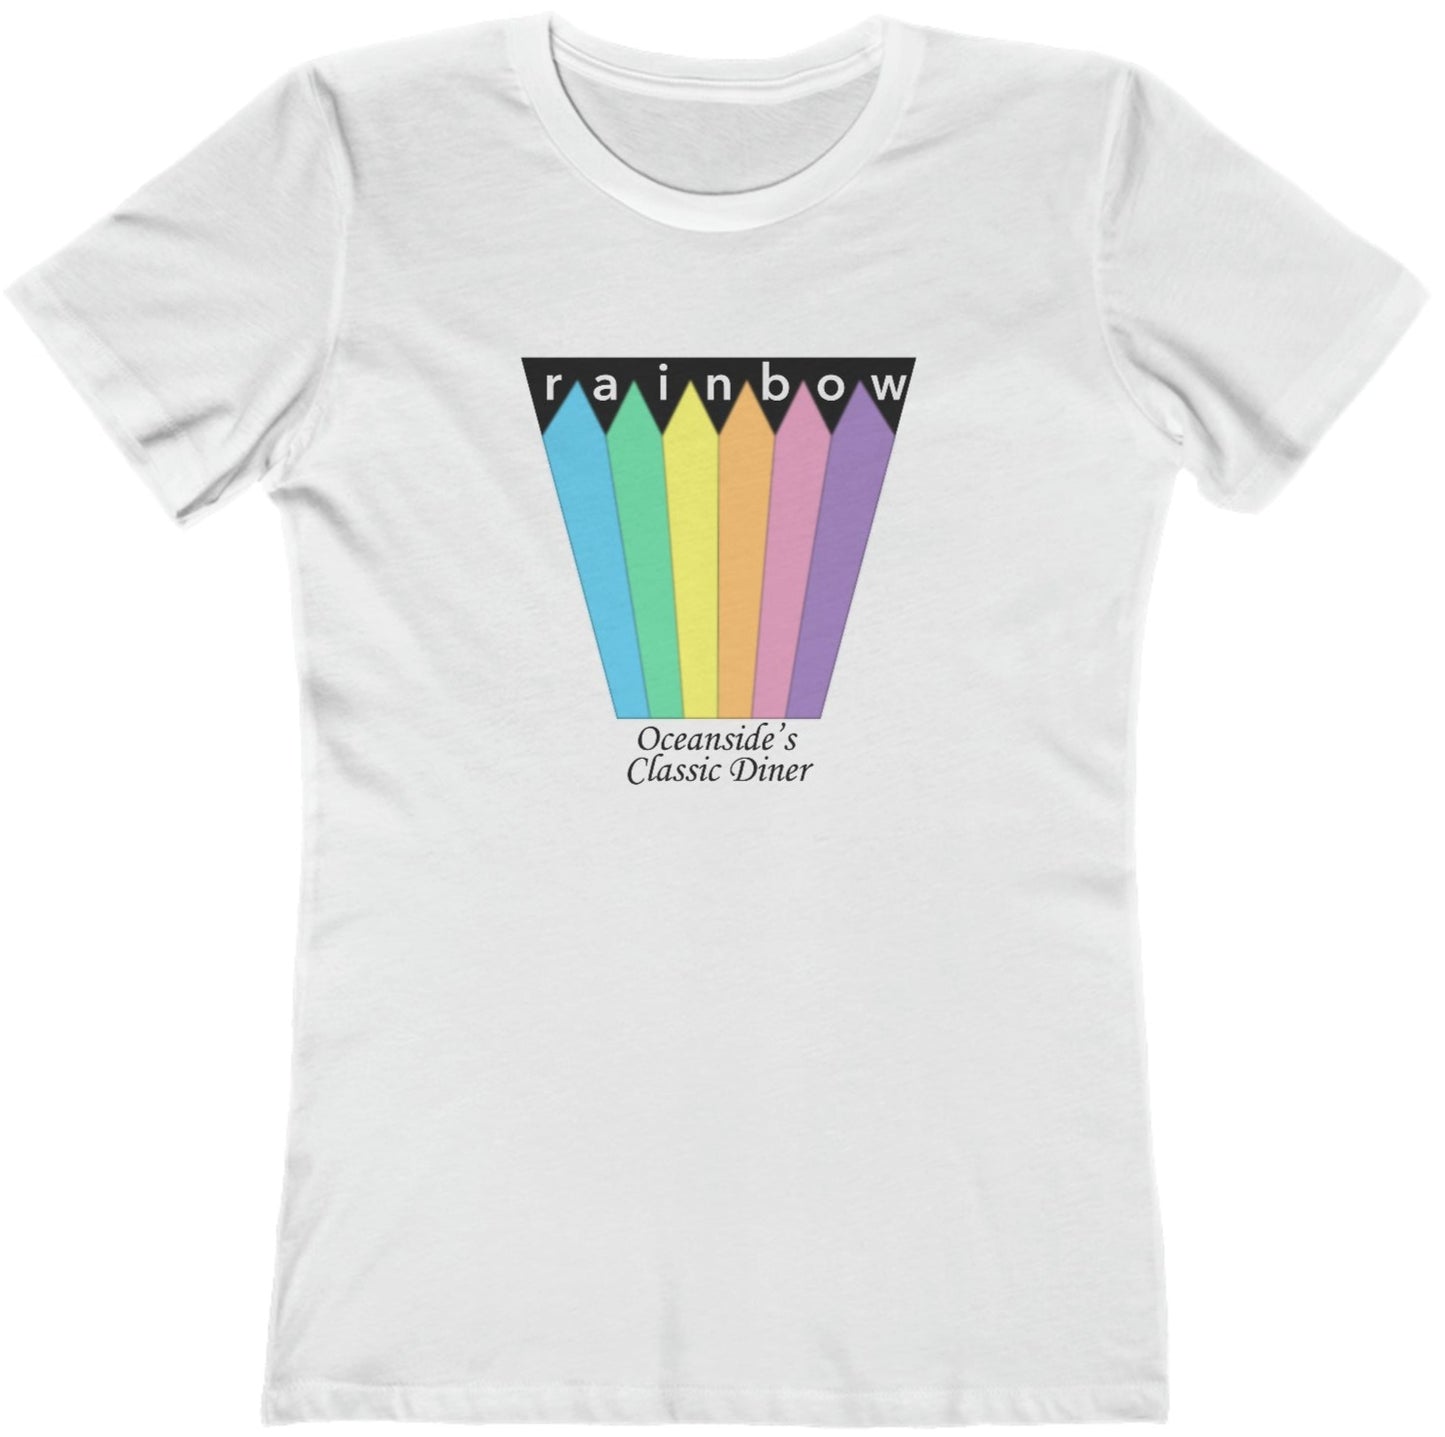 Rainbow Diner t-shirt